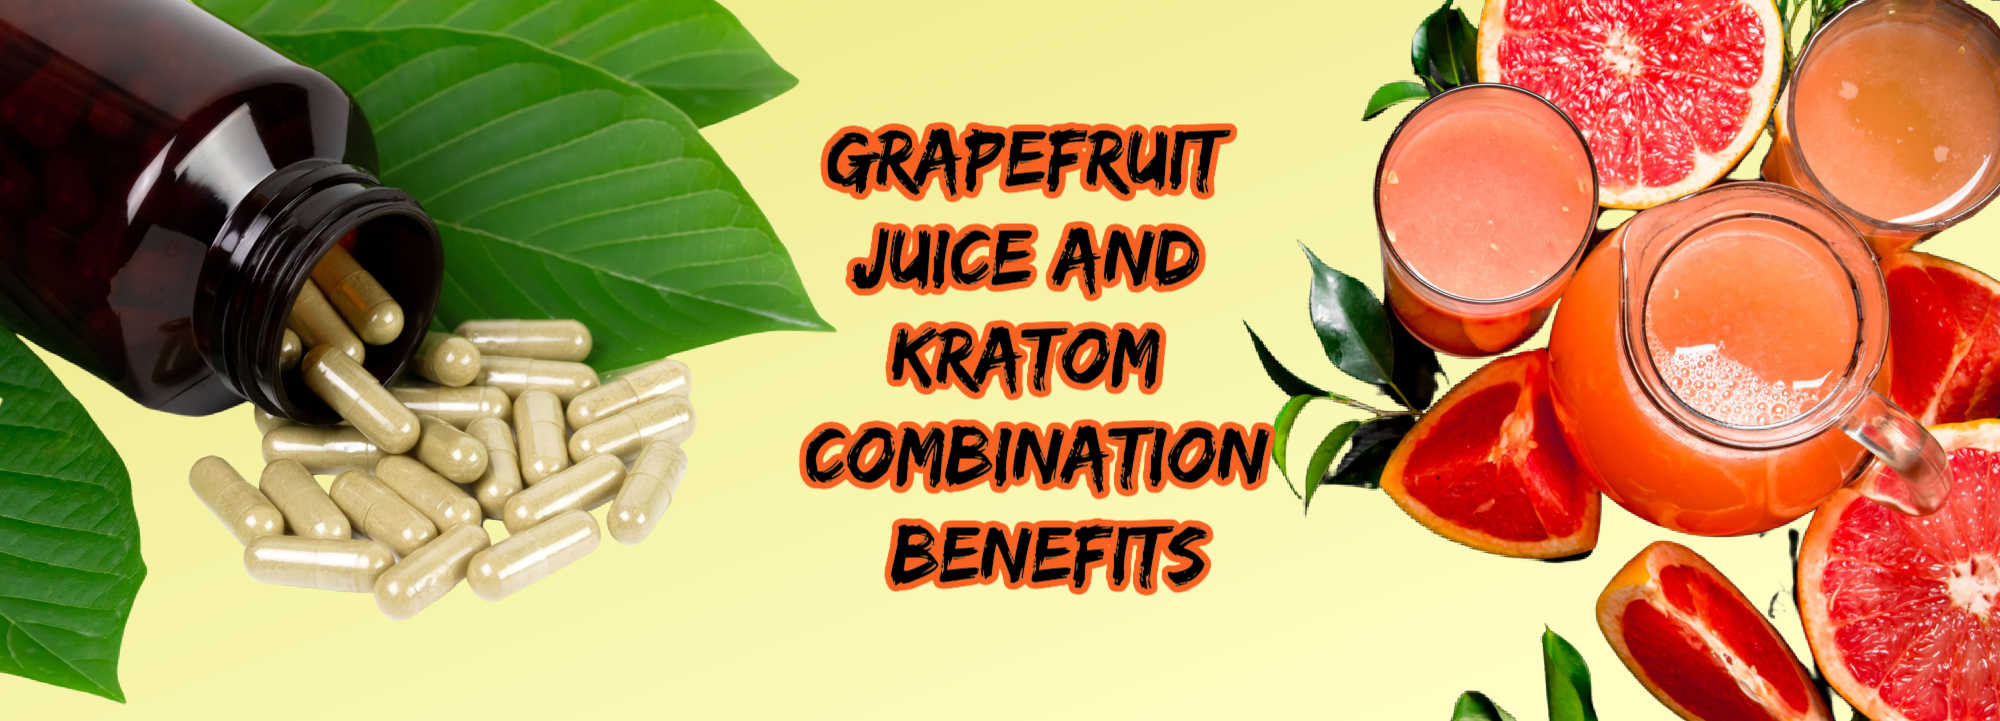 image of grapefruit juice and kratom benefits